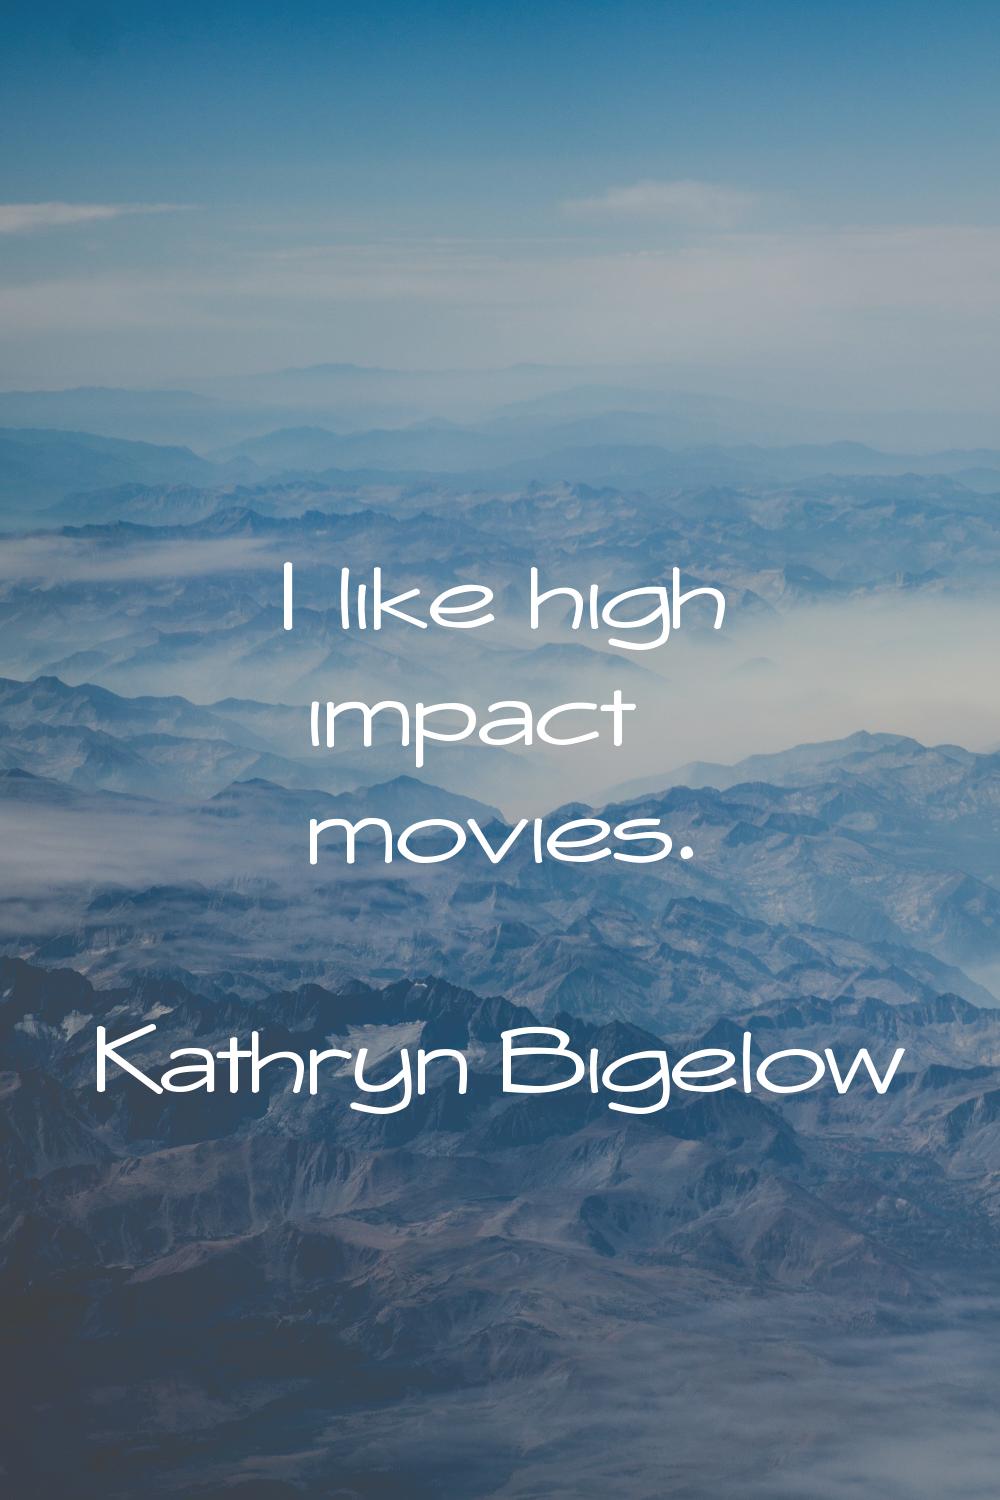 I like high impact movies.